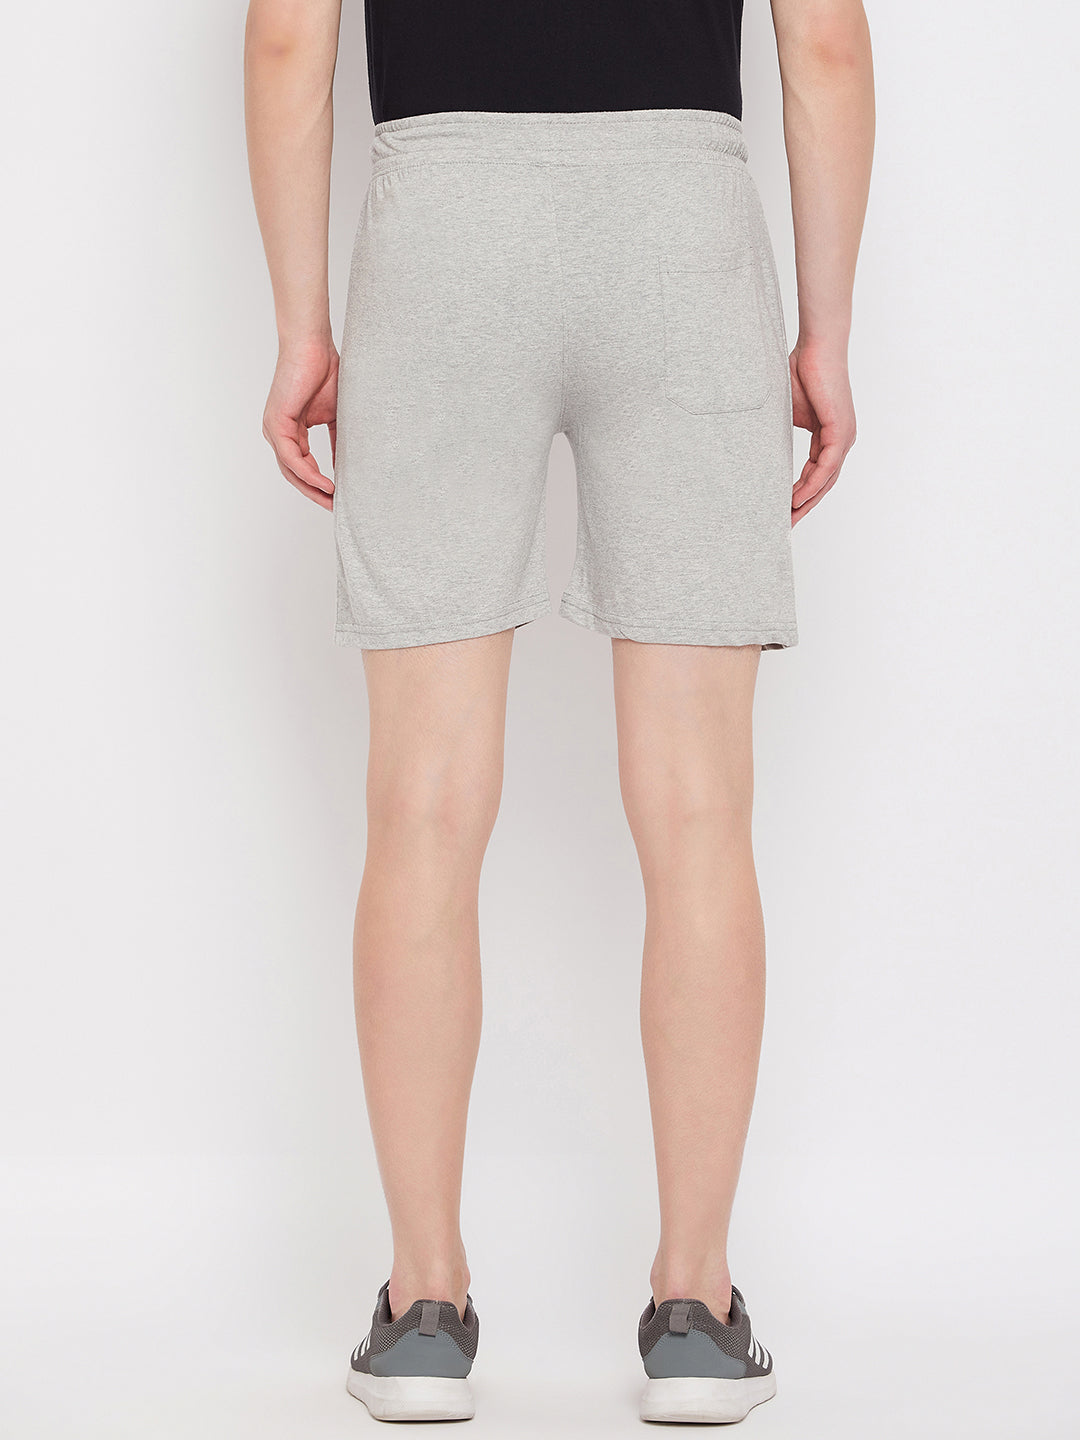 Livfree Men's Bermuda in Solid Pattern Both Side Zipper Pockets - 5% Milange Grey